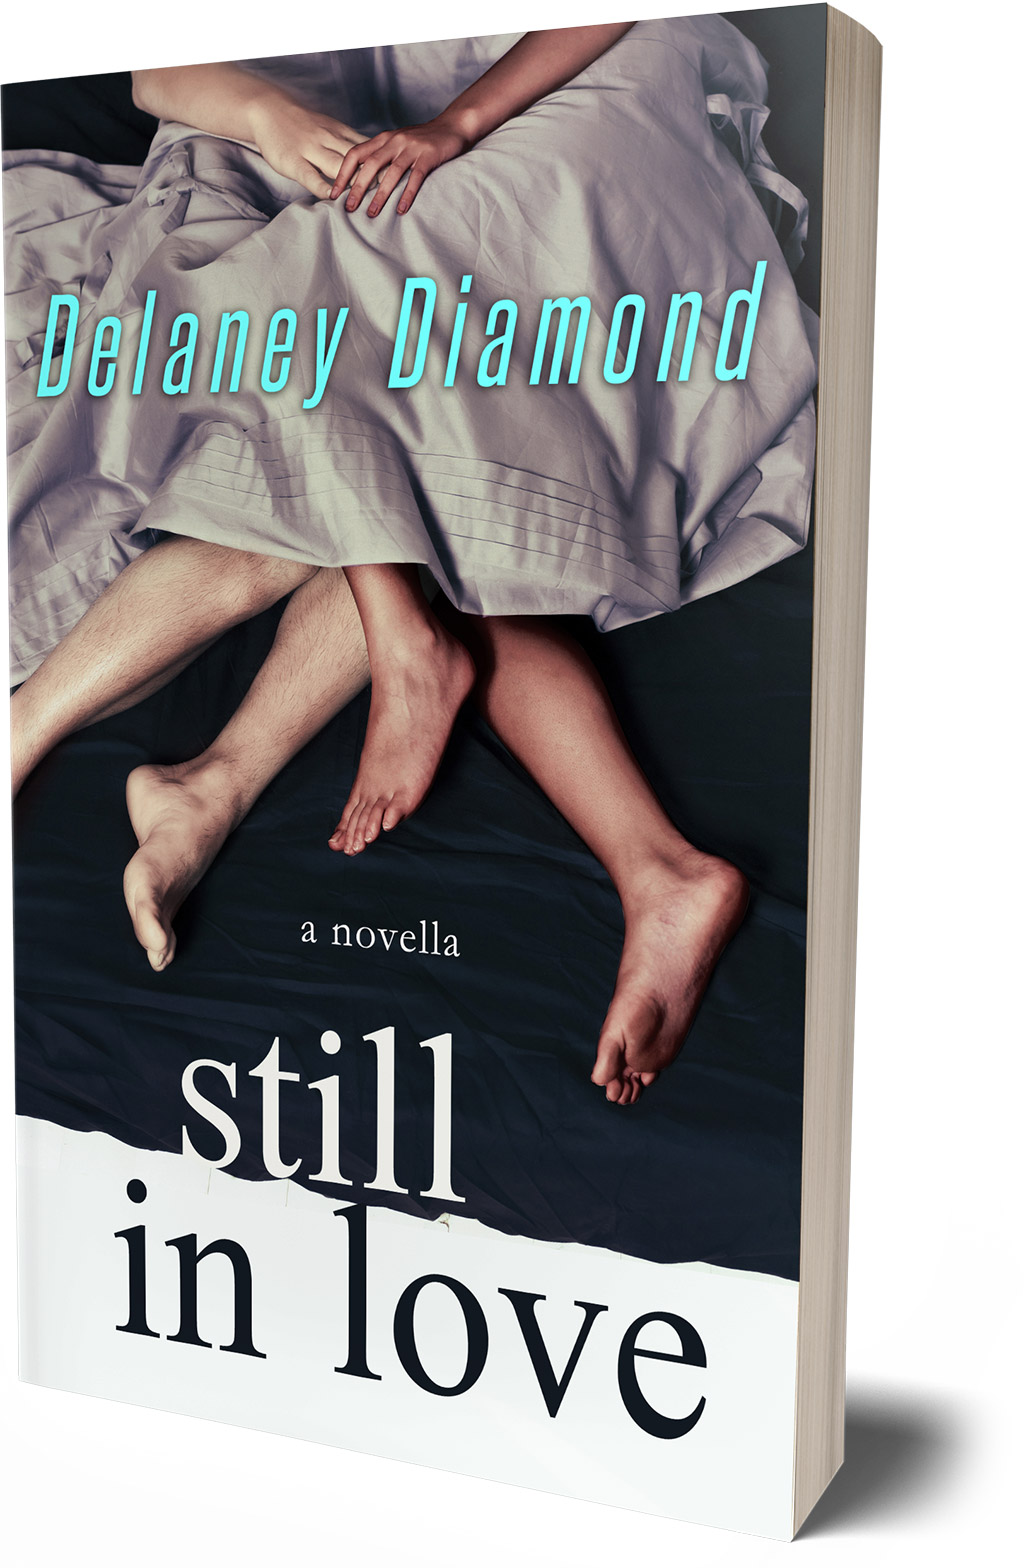 Still in Love, a novel by Delaney Diamond